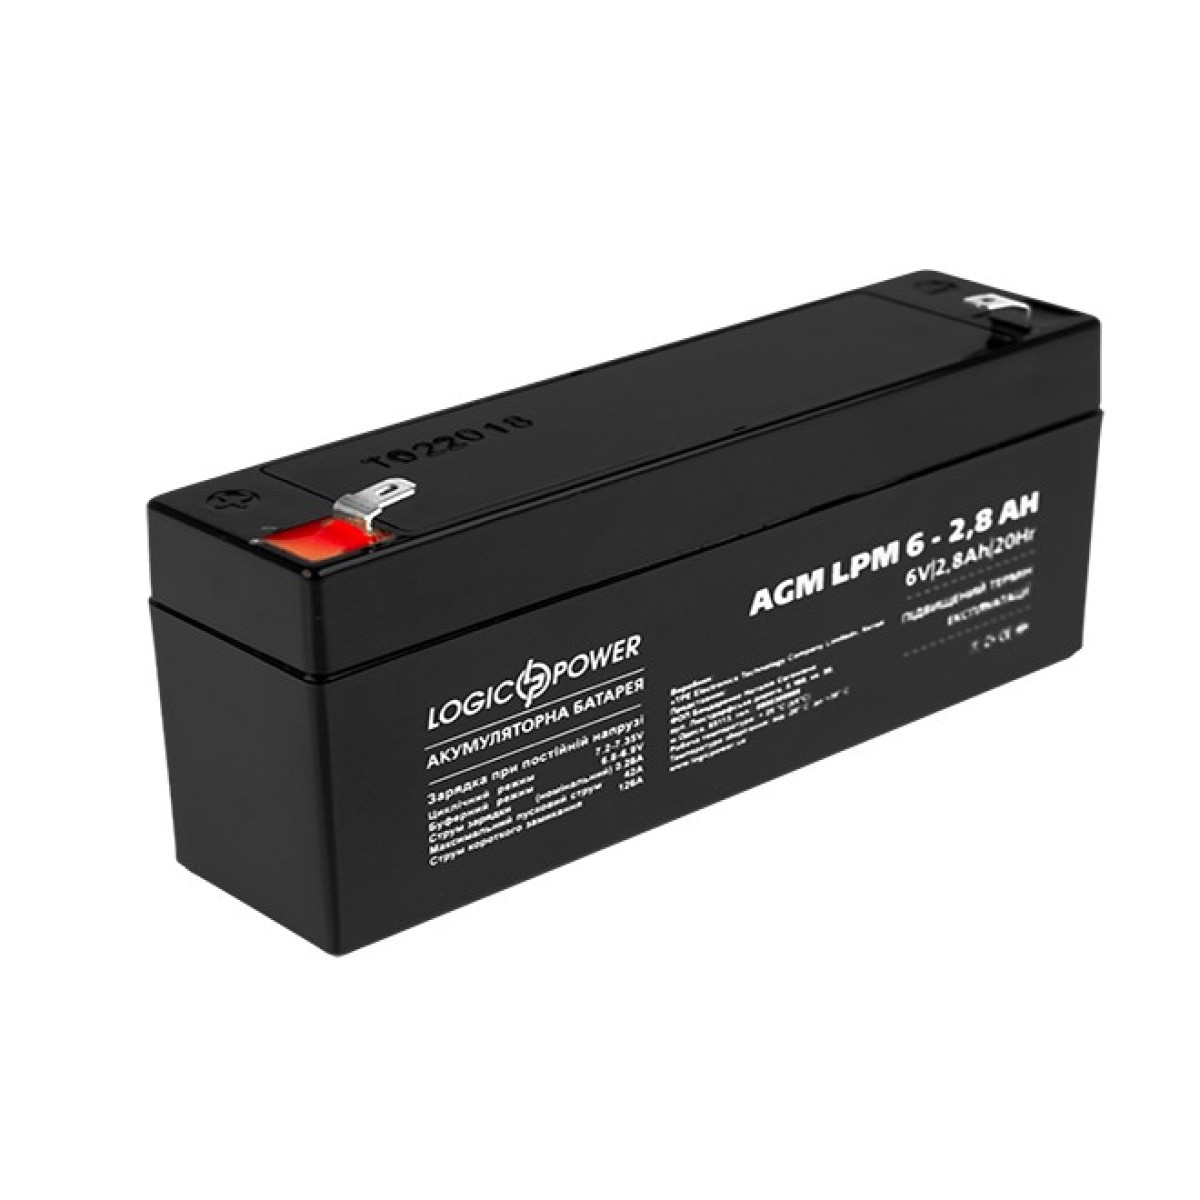 Аккумуляторные батареи LogicPower AGM LPM-6-2.8 AH - фото 1